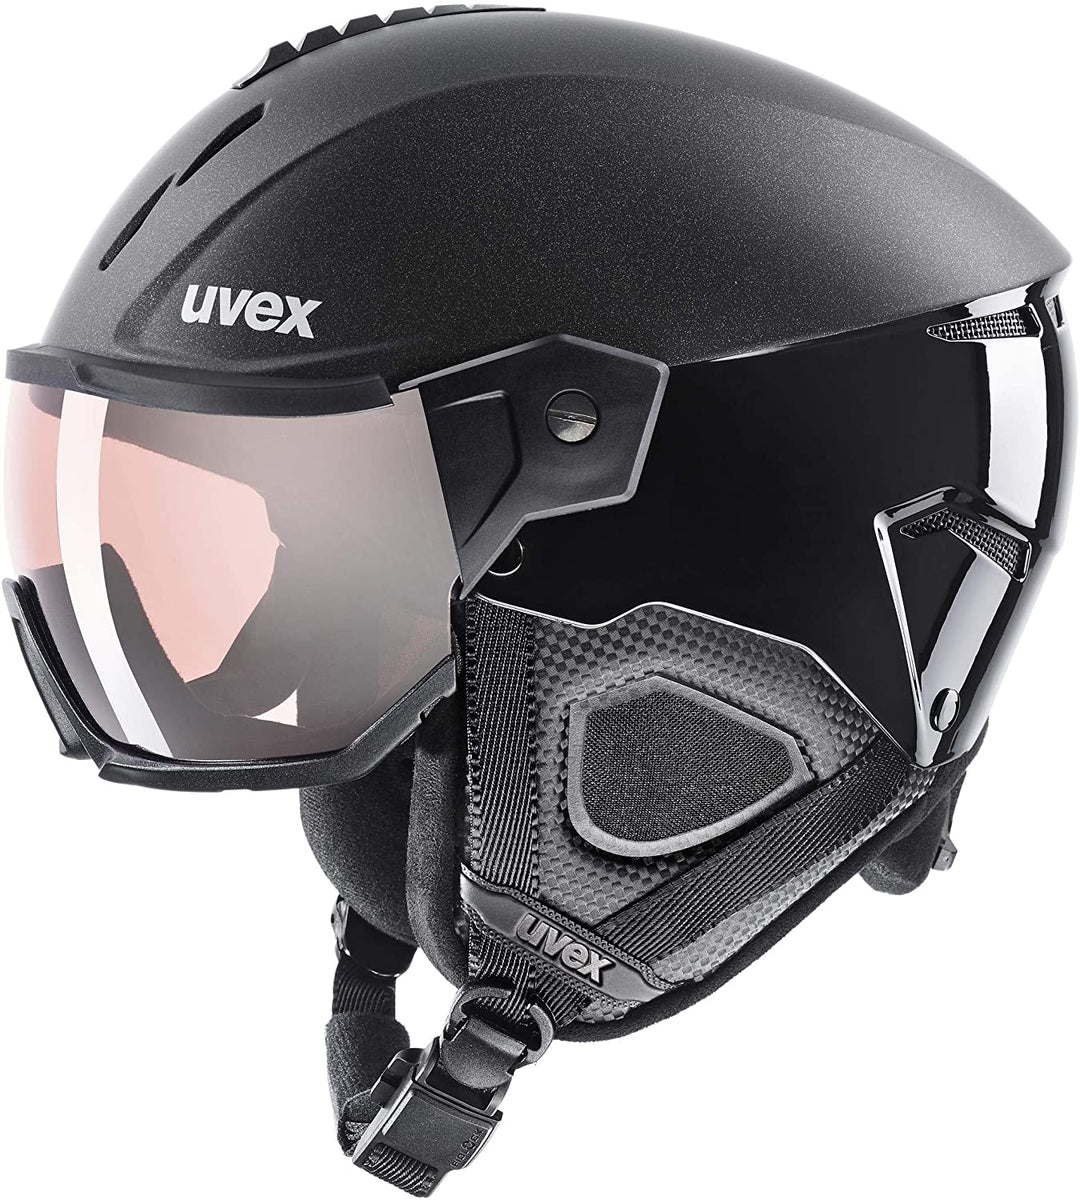 Uvex Unisex's Instinct Visor pro v ski Helmet, Black, 53-55 cm